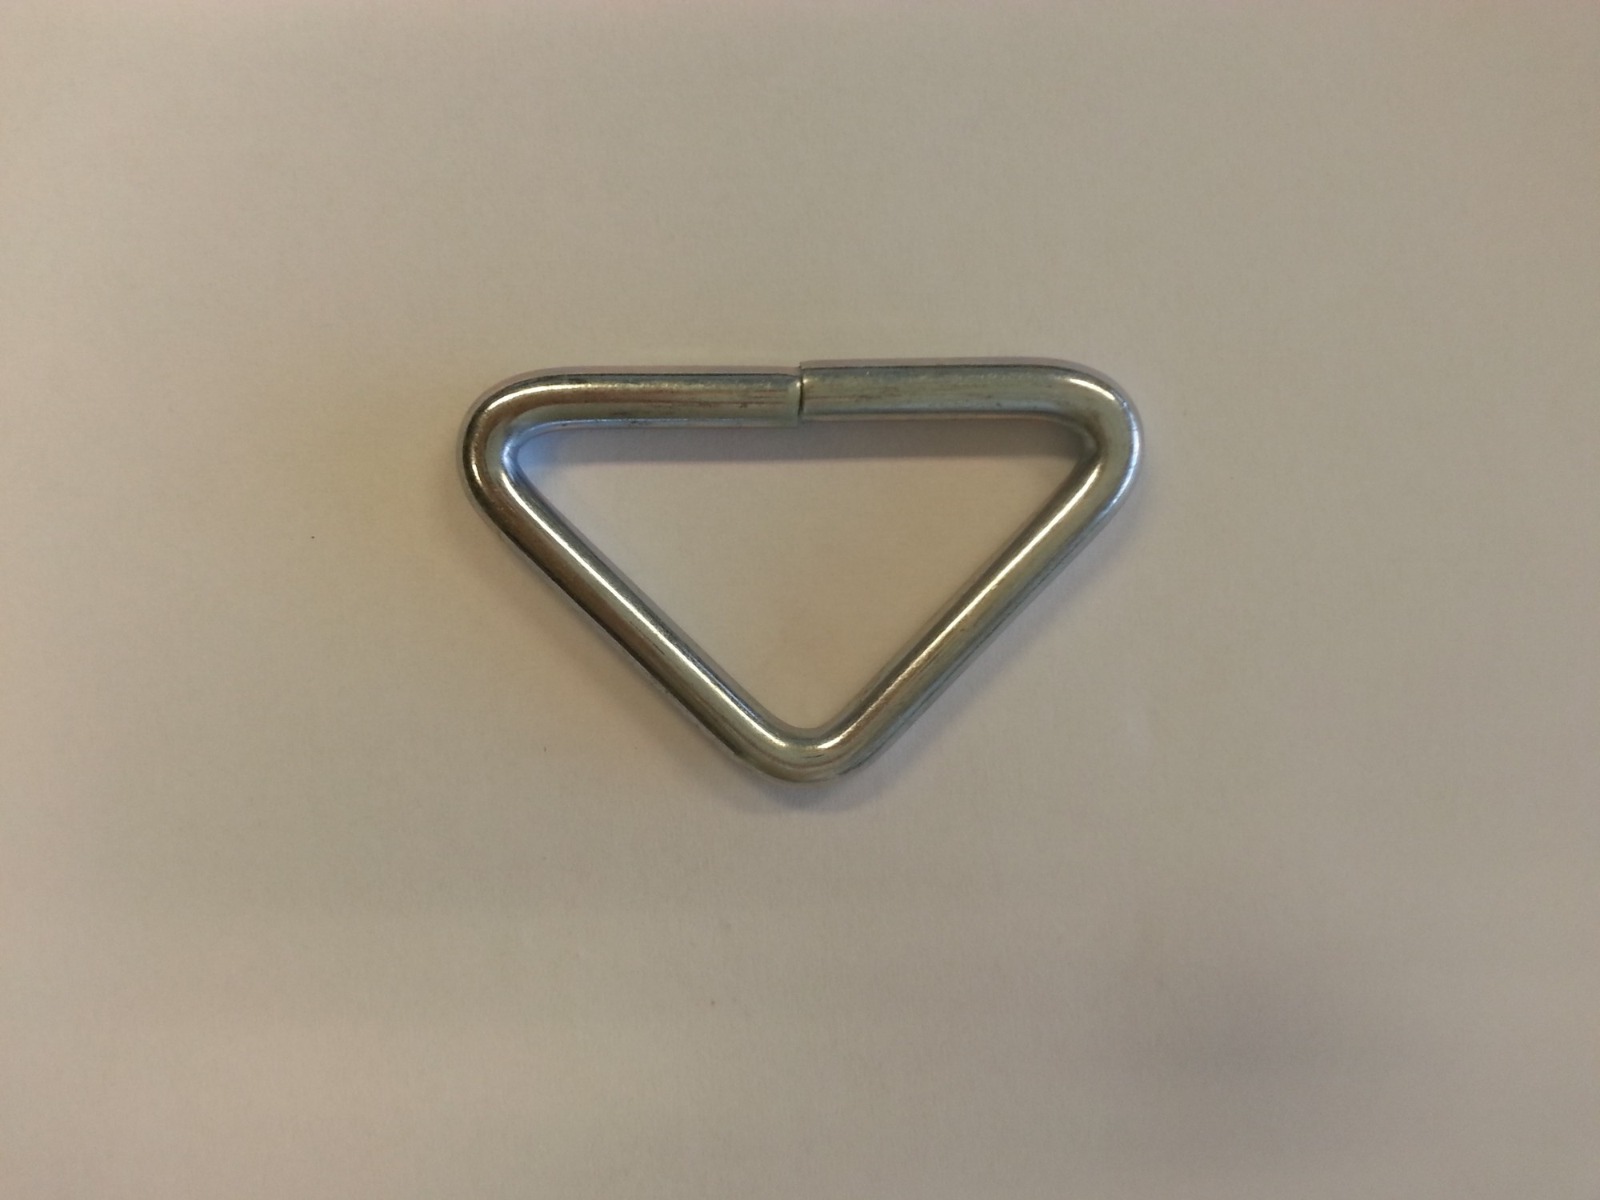 Avyna Spring D-Ring - Metall-Dreieck für Sprungtuch